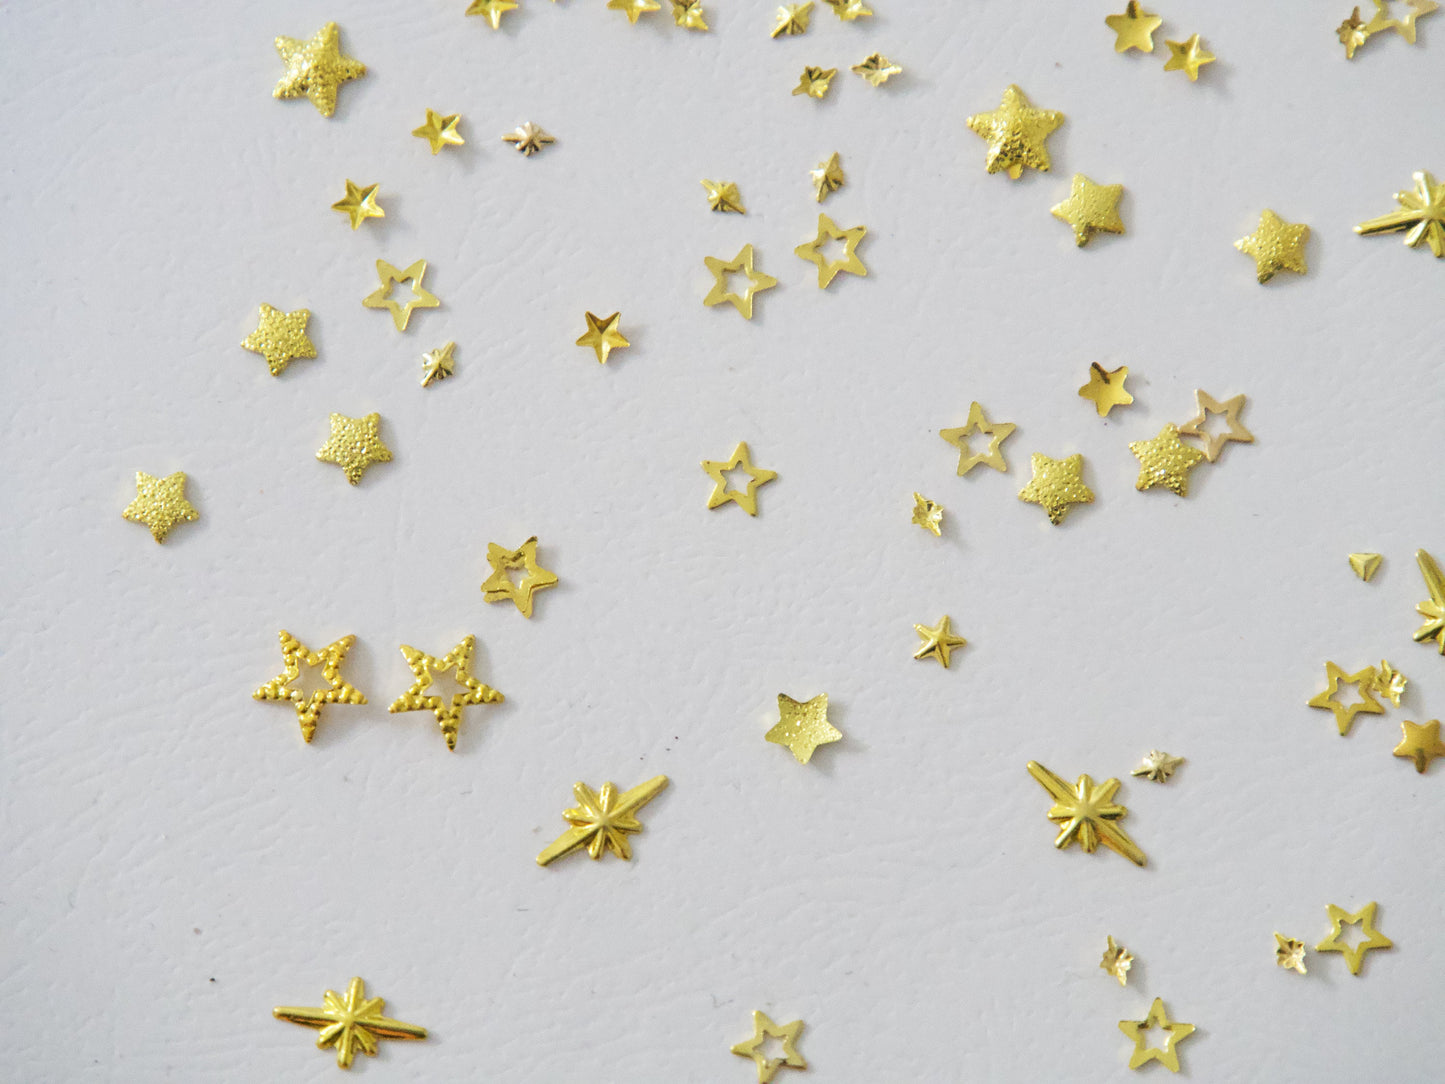 100pcs Gold Star Rivet Nail Decals/ Christmas Starry Theme Nail Supply Metallic Studs / Golden Quadrangular Stars Miniature